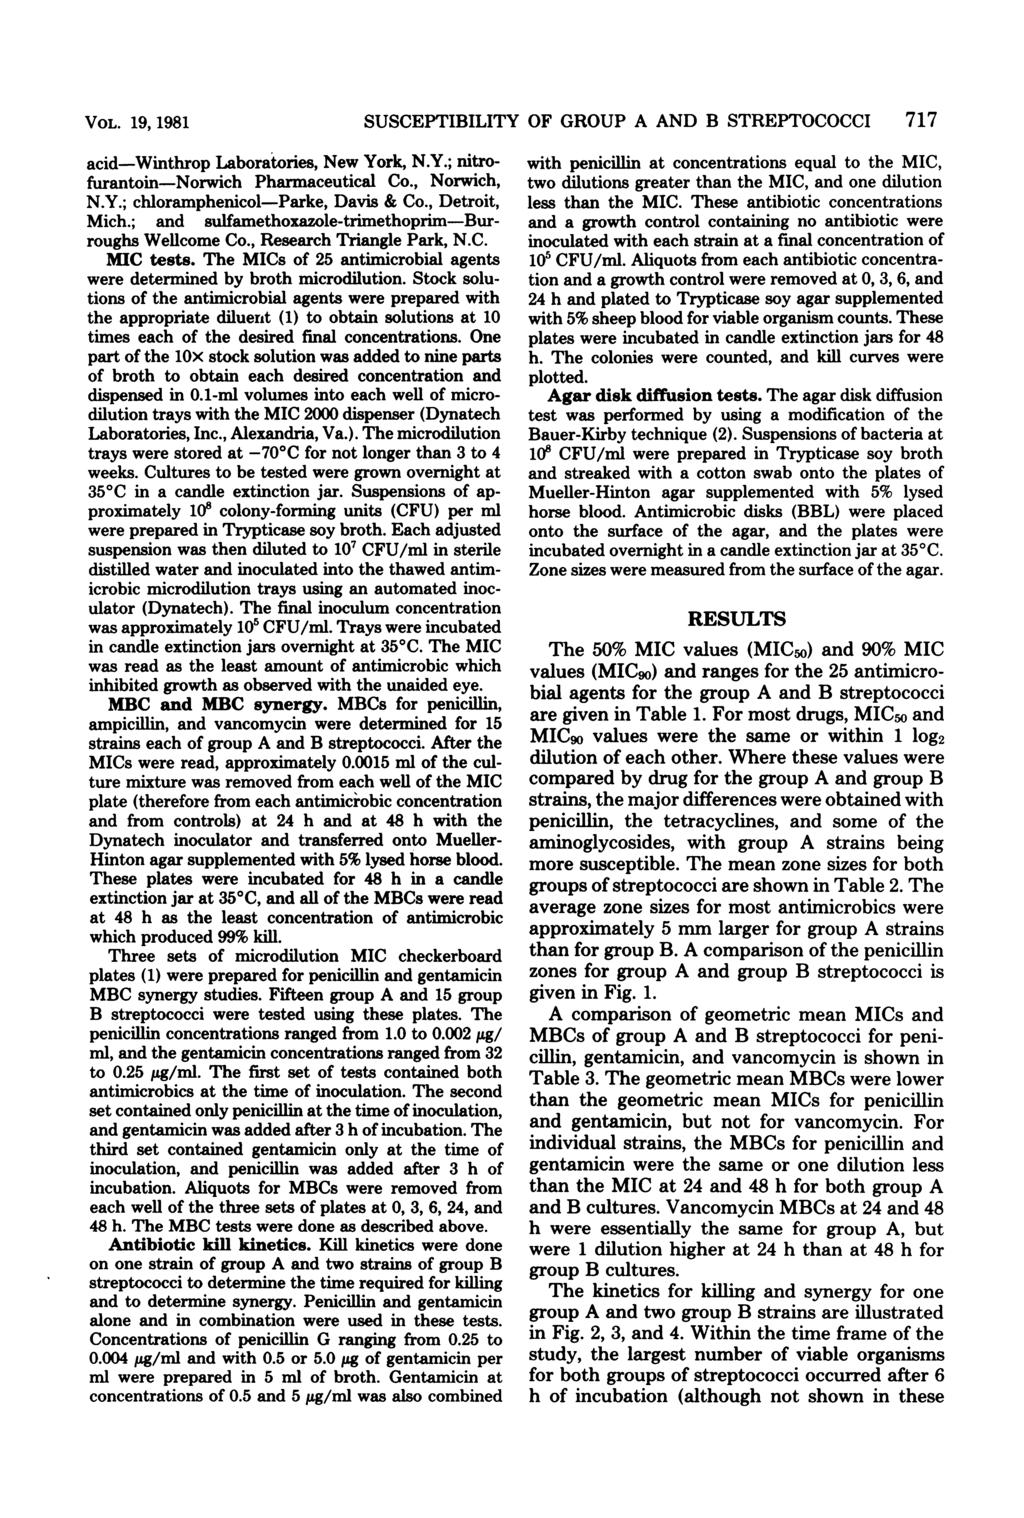 VOL. 19, 1981 acid-winthrop Laboratories, New York, N.Y.; nitrofurantoin-norwich Pharmaceutical Co., Norwich, N.Y.; chloramphenicol-parke, Davis & Co., Detroit, Mich.